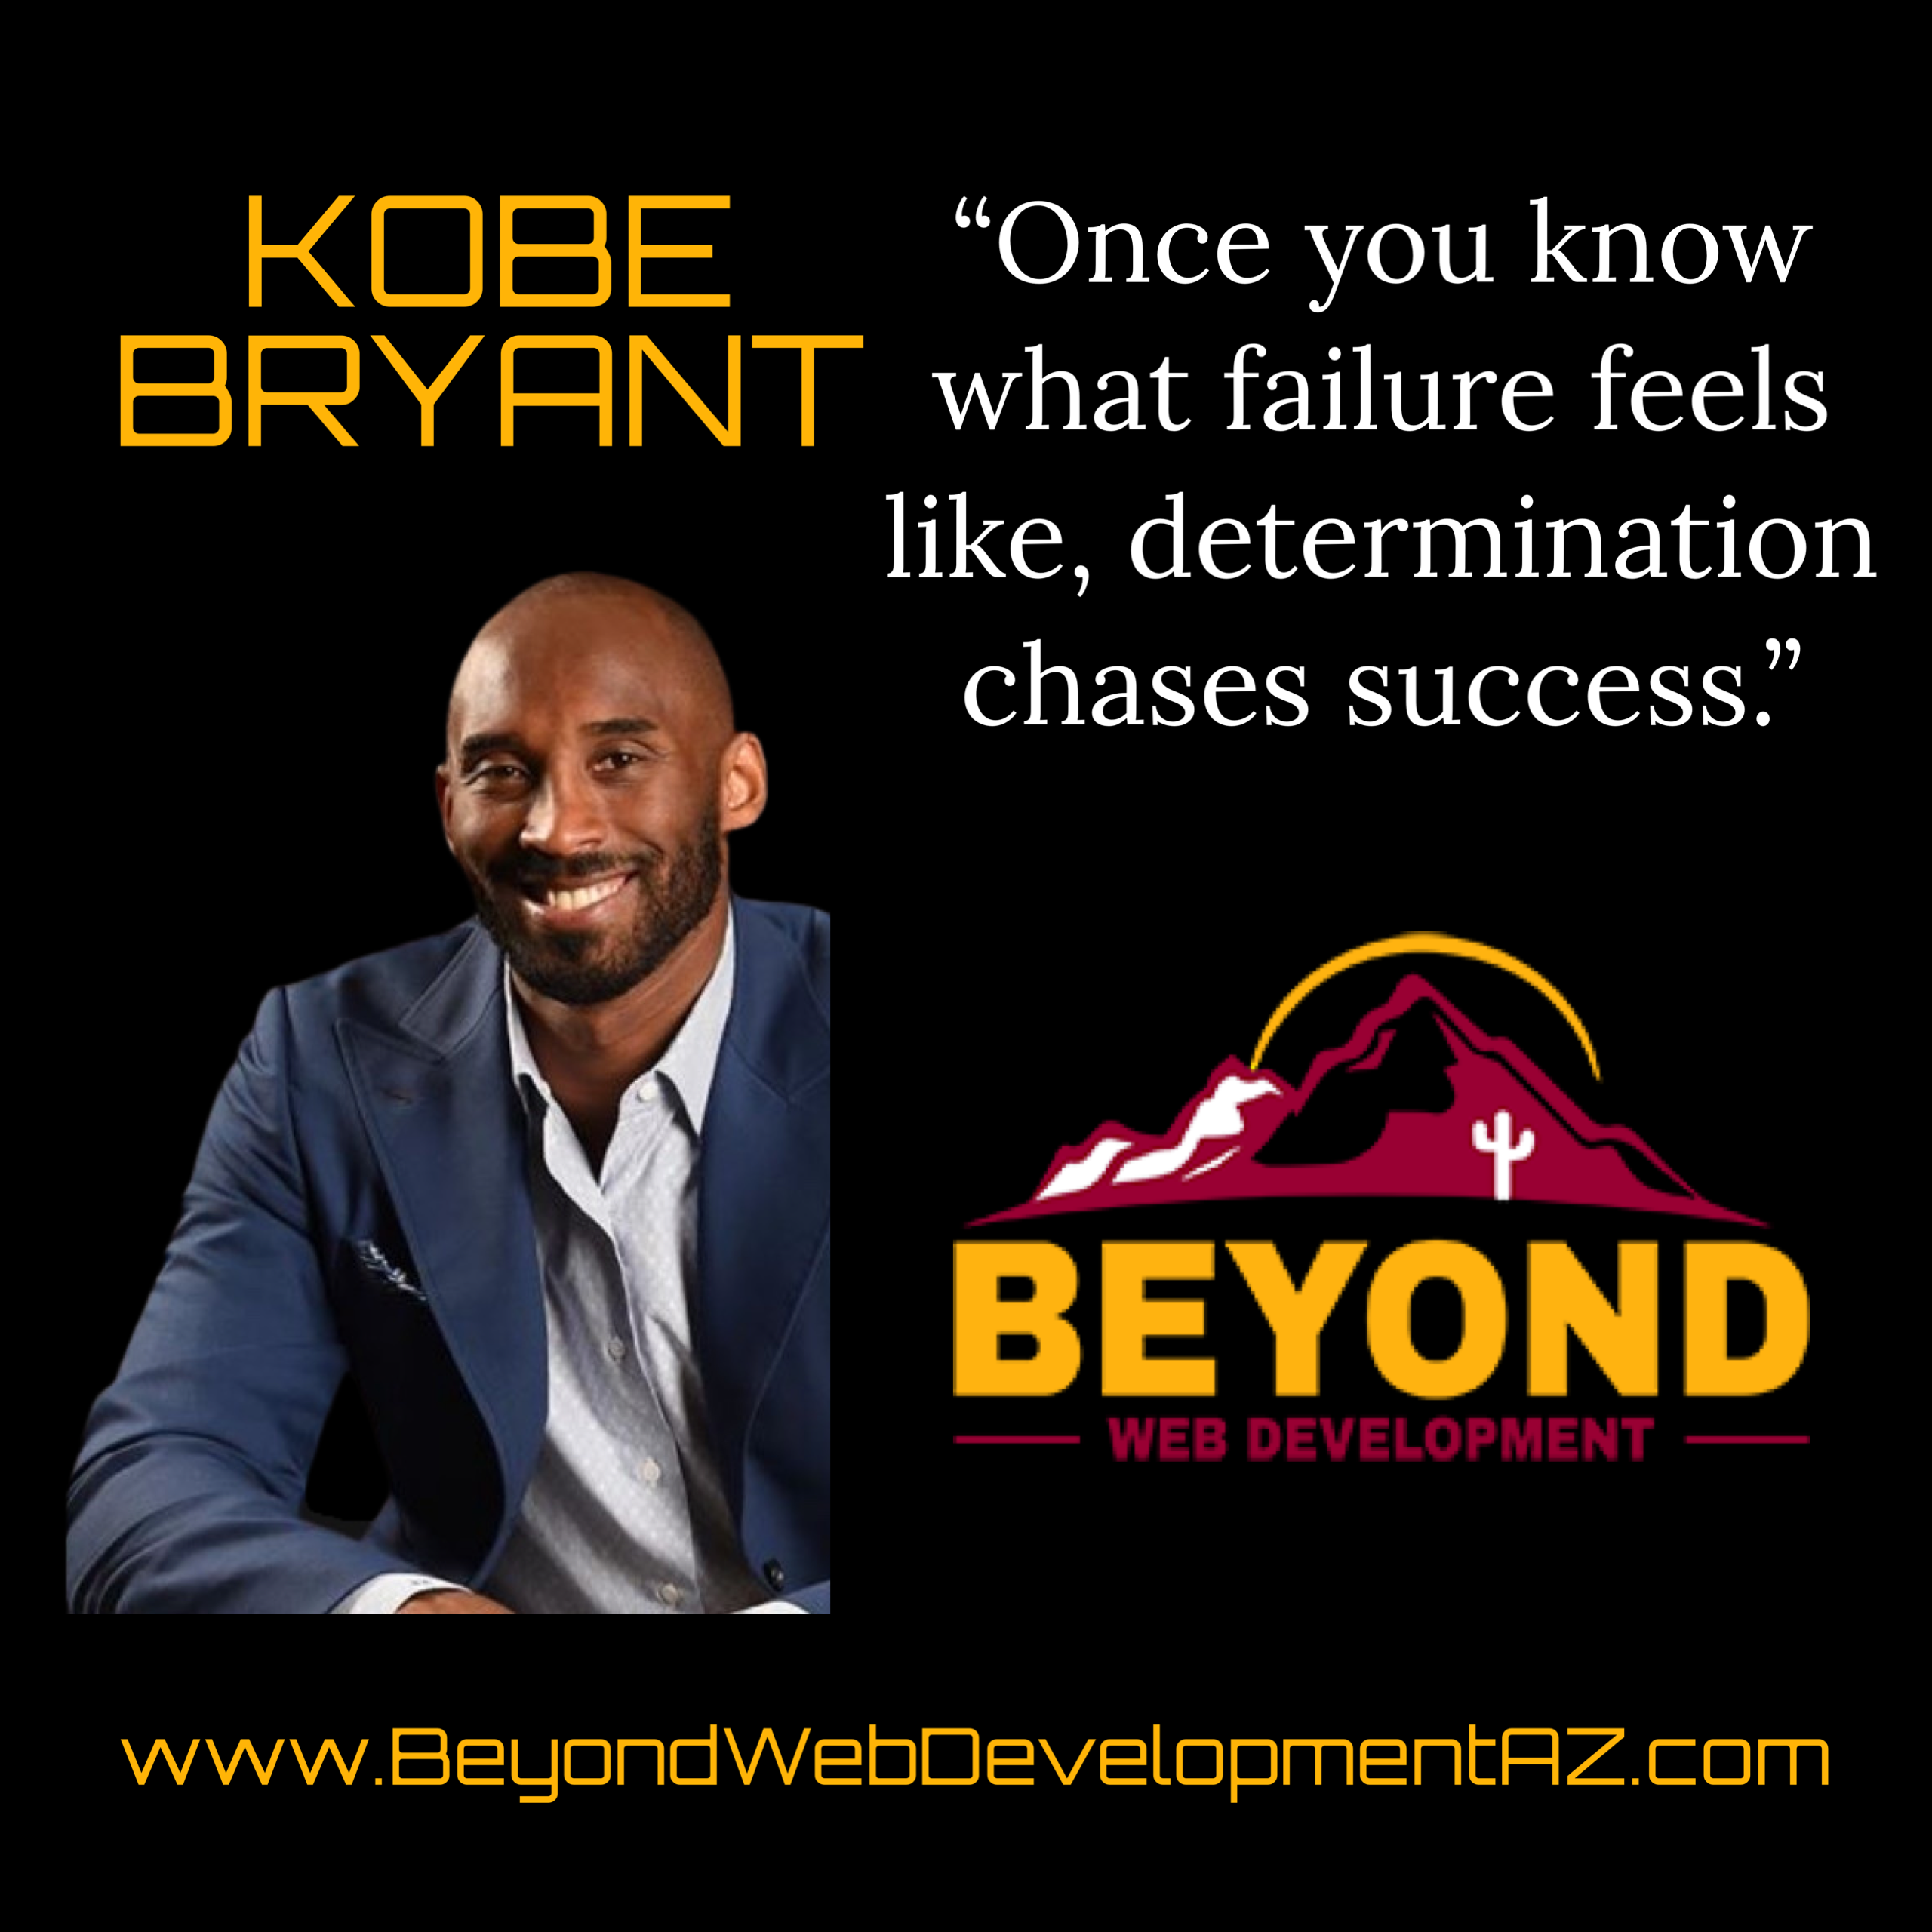 Kobe and Determination